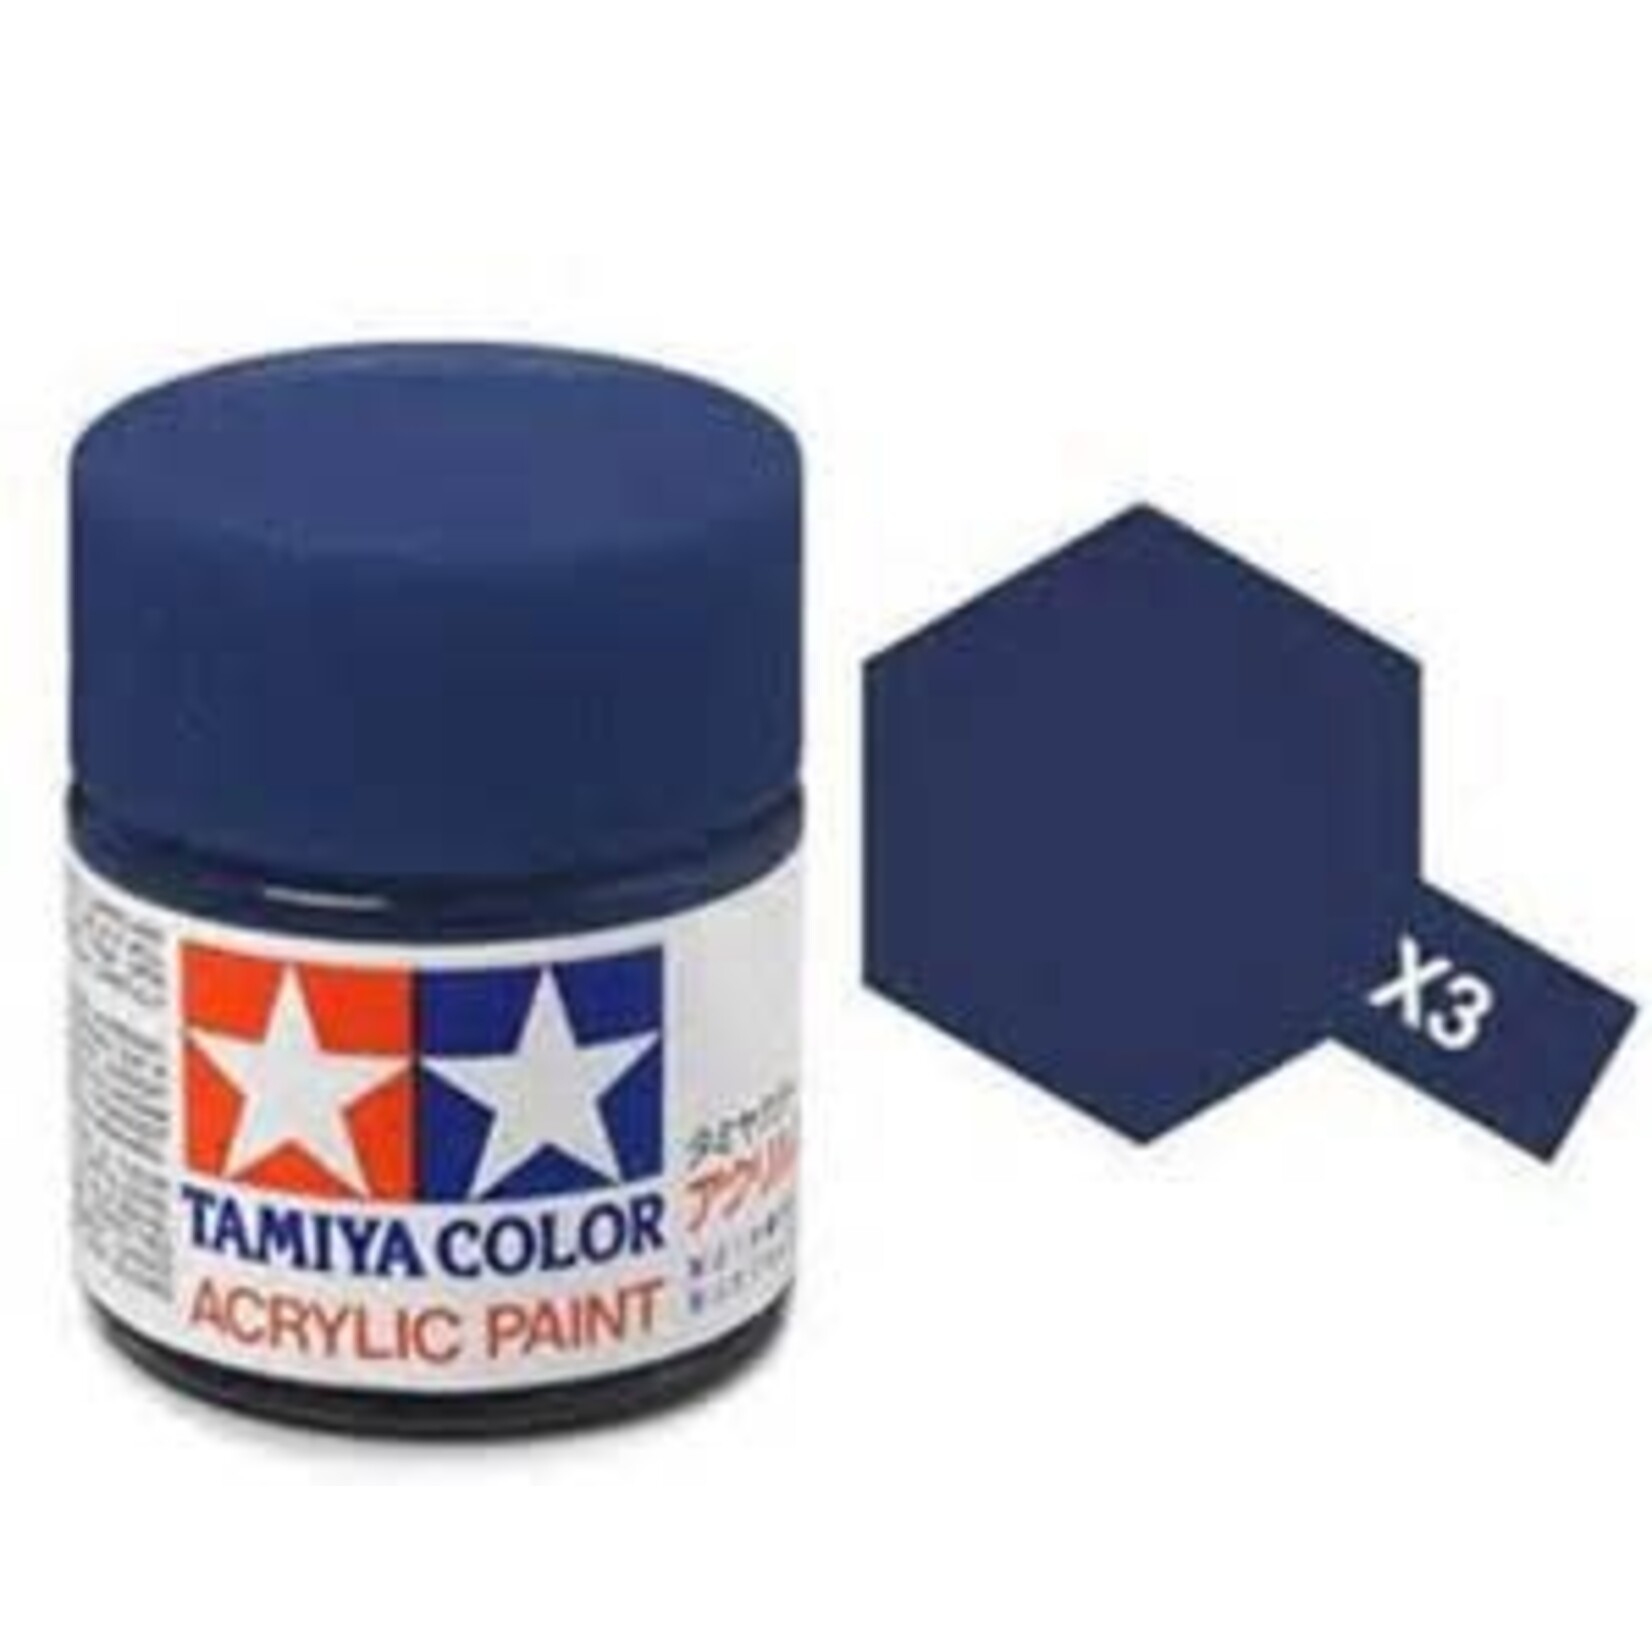 Tamiya Acrylic Paint 10ml